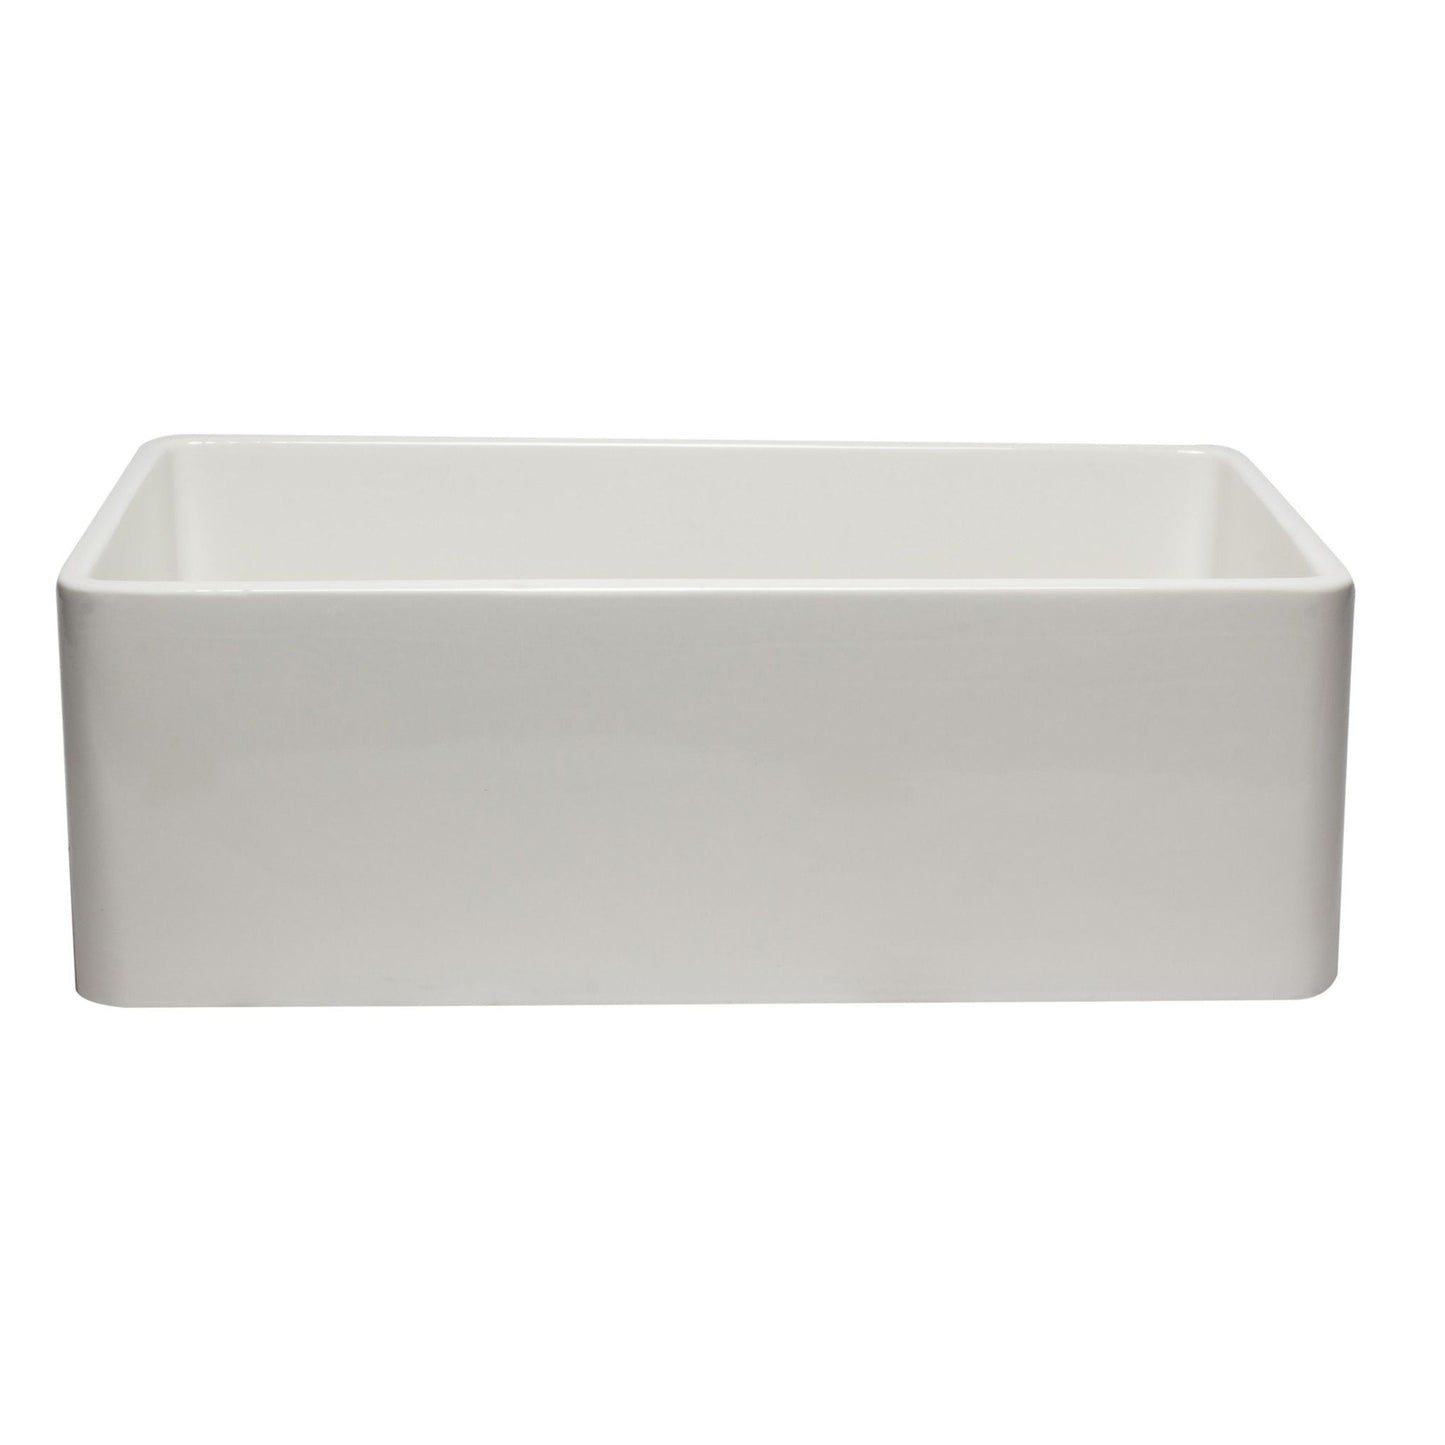 ALFI Brand AB3020SB-W 30 inch White Reversible Single Fireclay Farmhouse Kitchen Sink